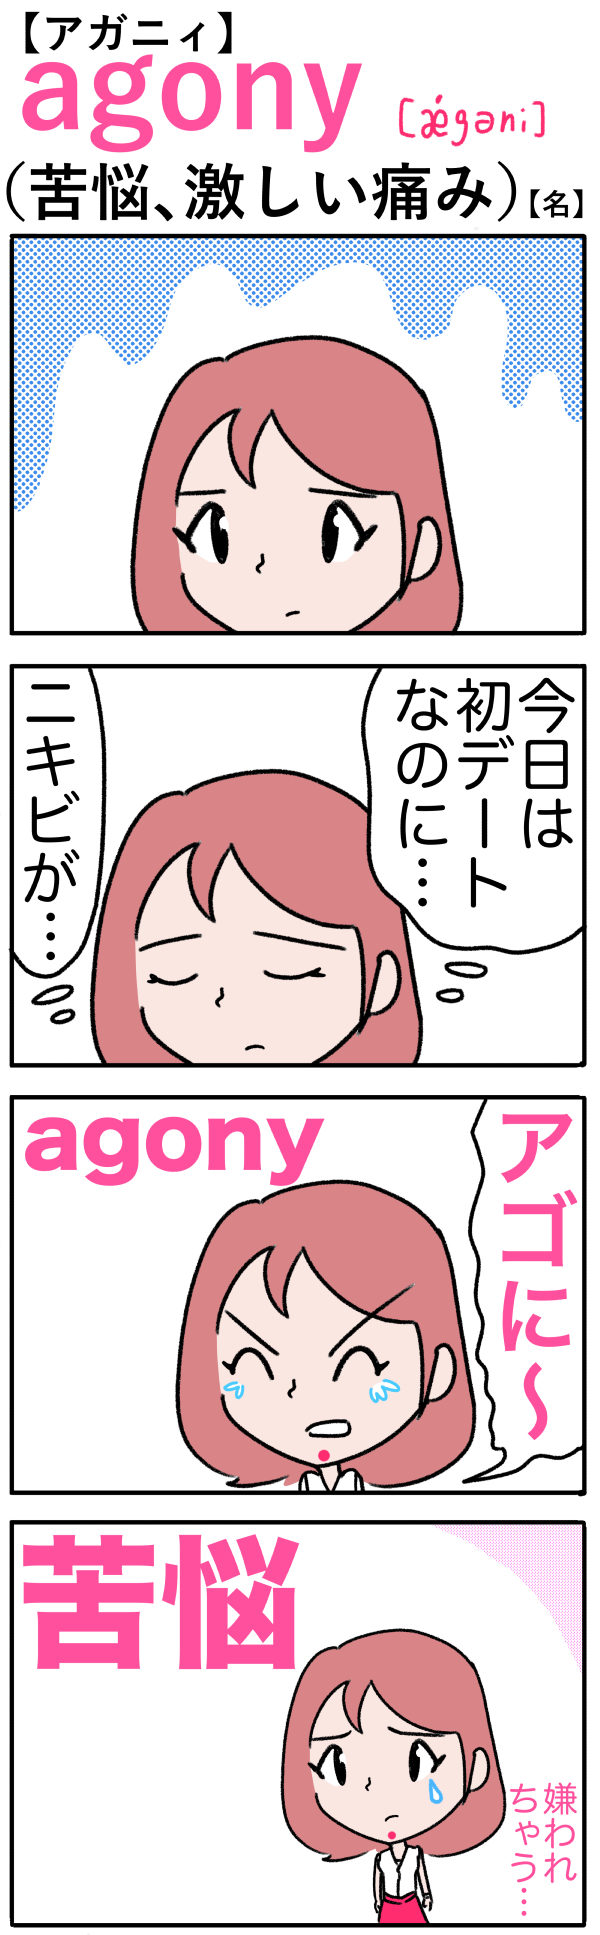 agony（苦悩）の語呂合わせ英単語